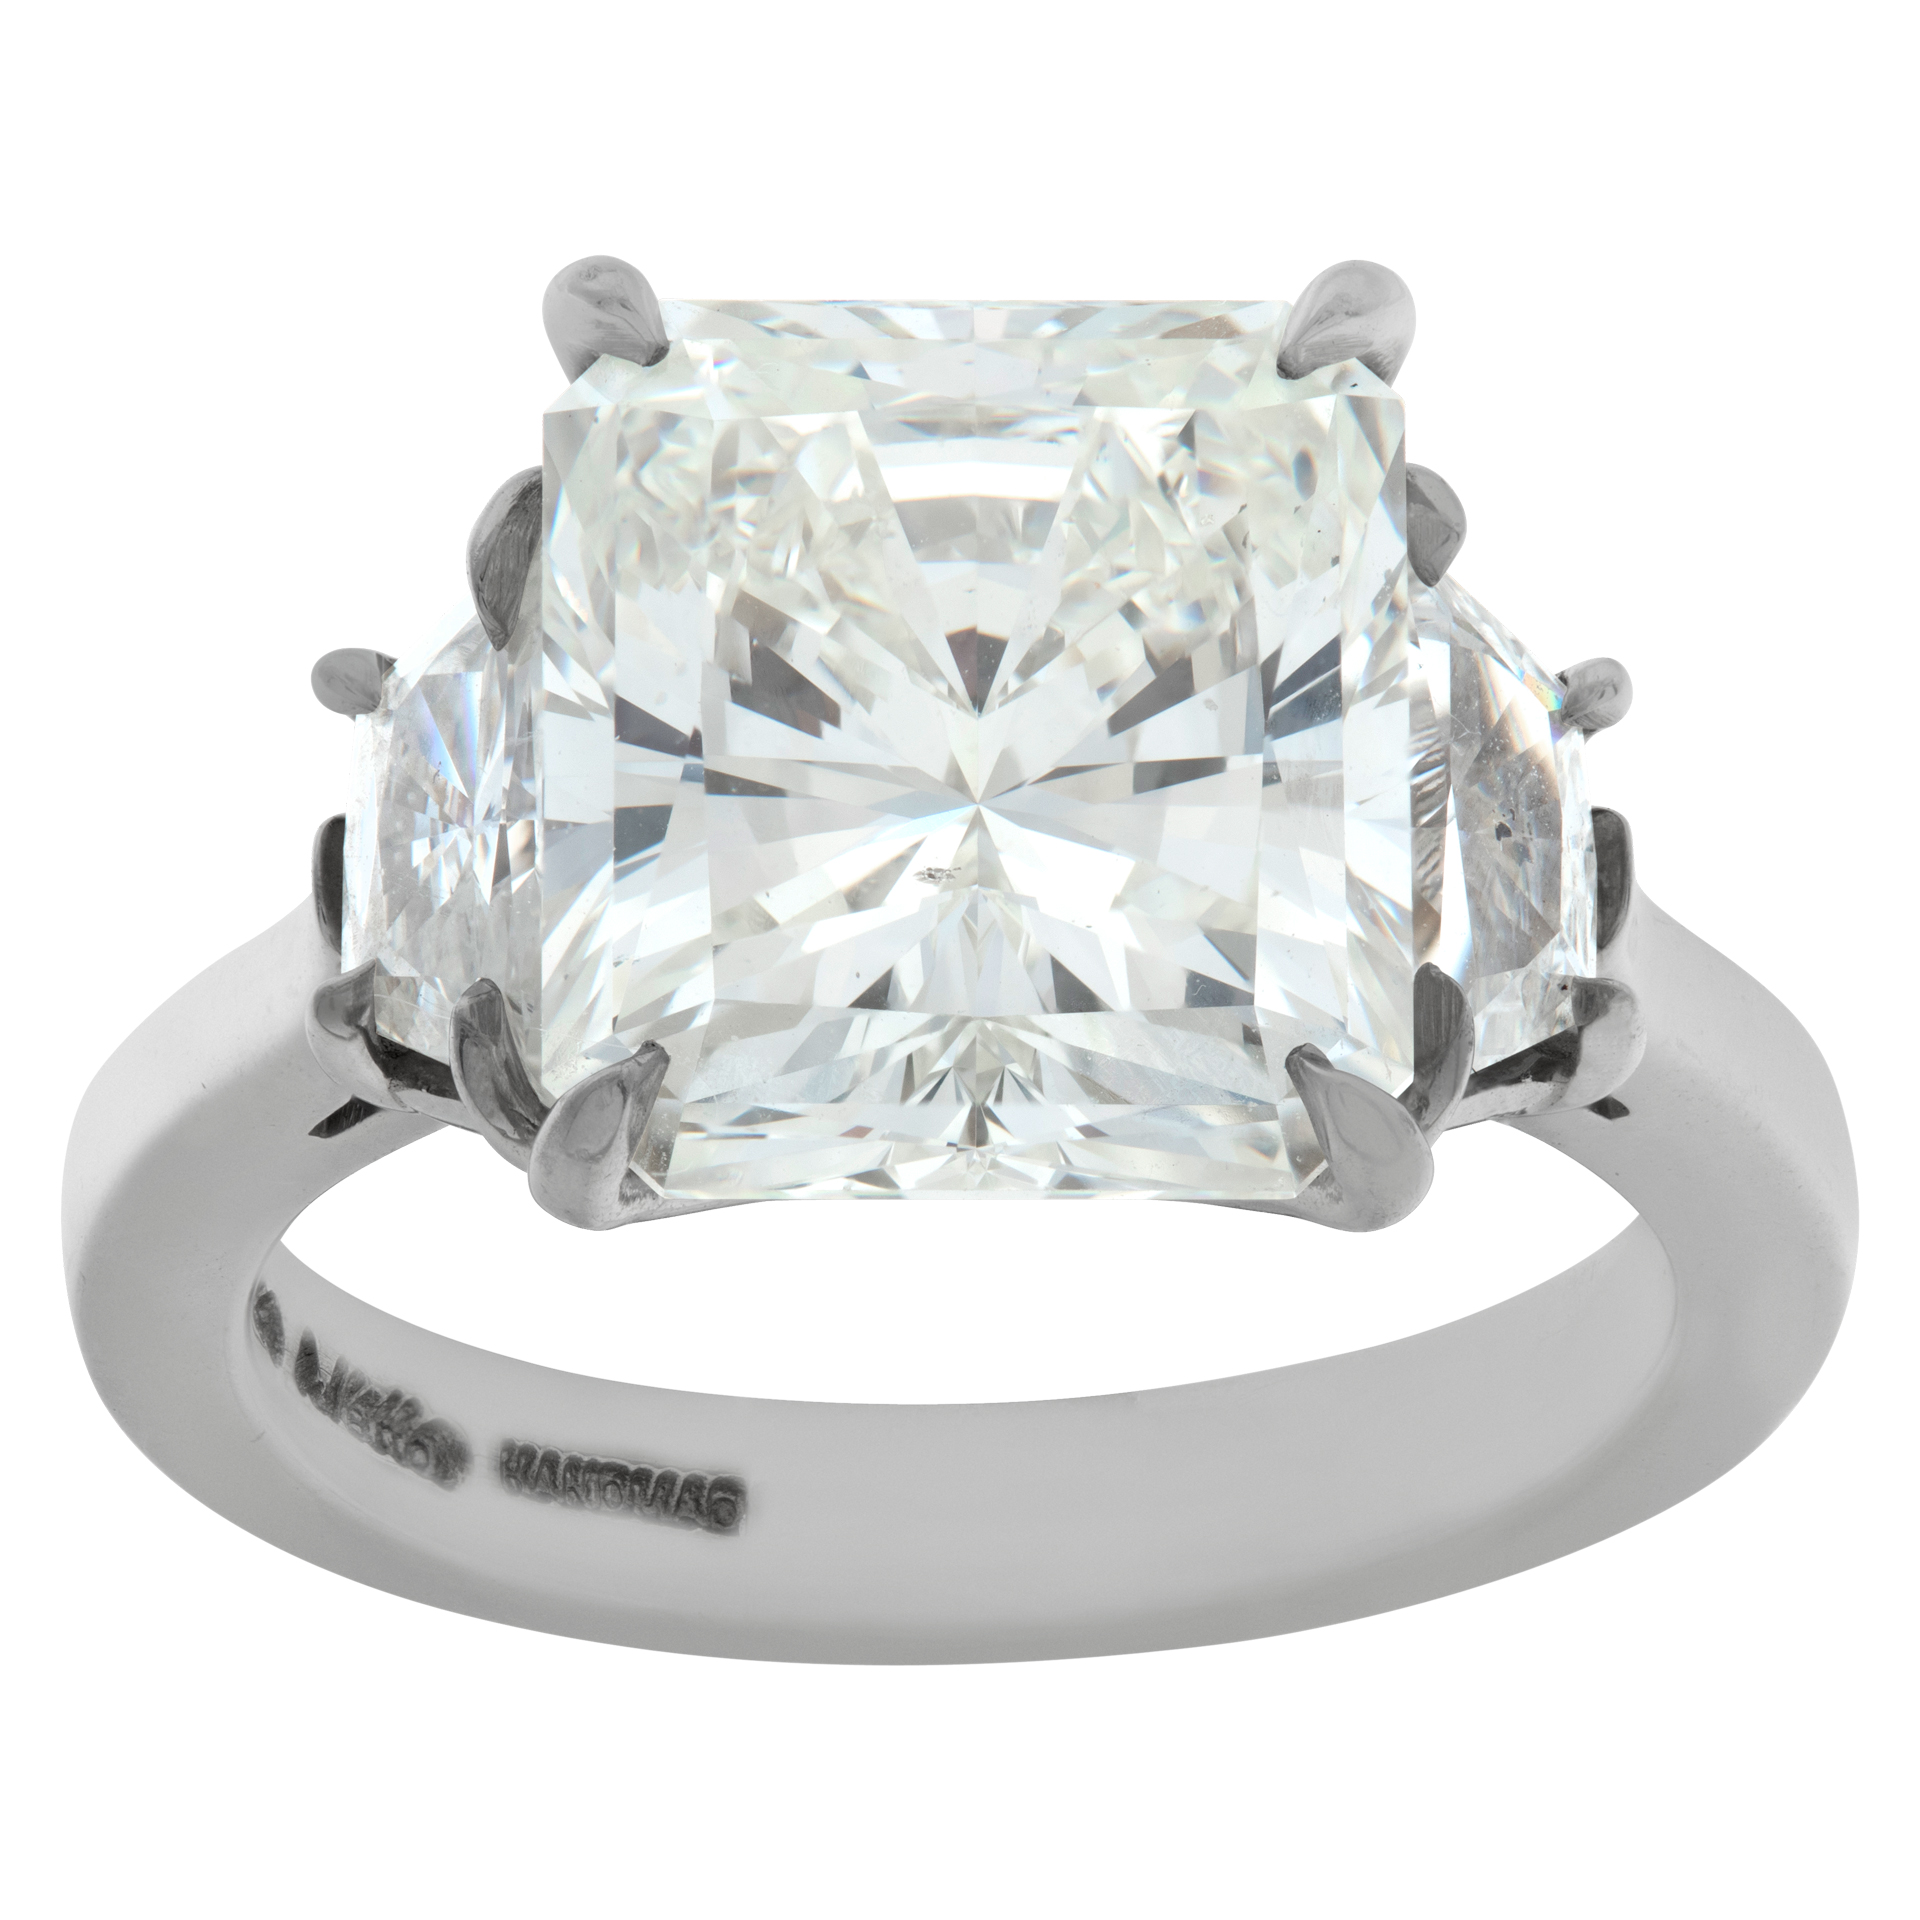 GIA certified cut-cornered rectangular modified brilliant "RADIANT" cut diamond 5.07 carat ( I color, VS2 clarity) ring set in platinum